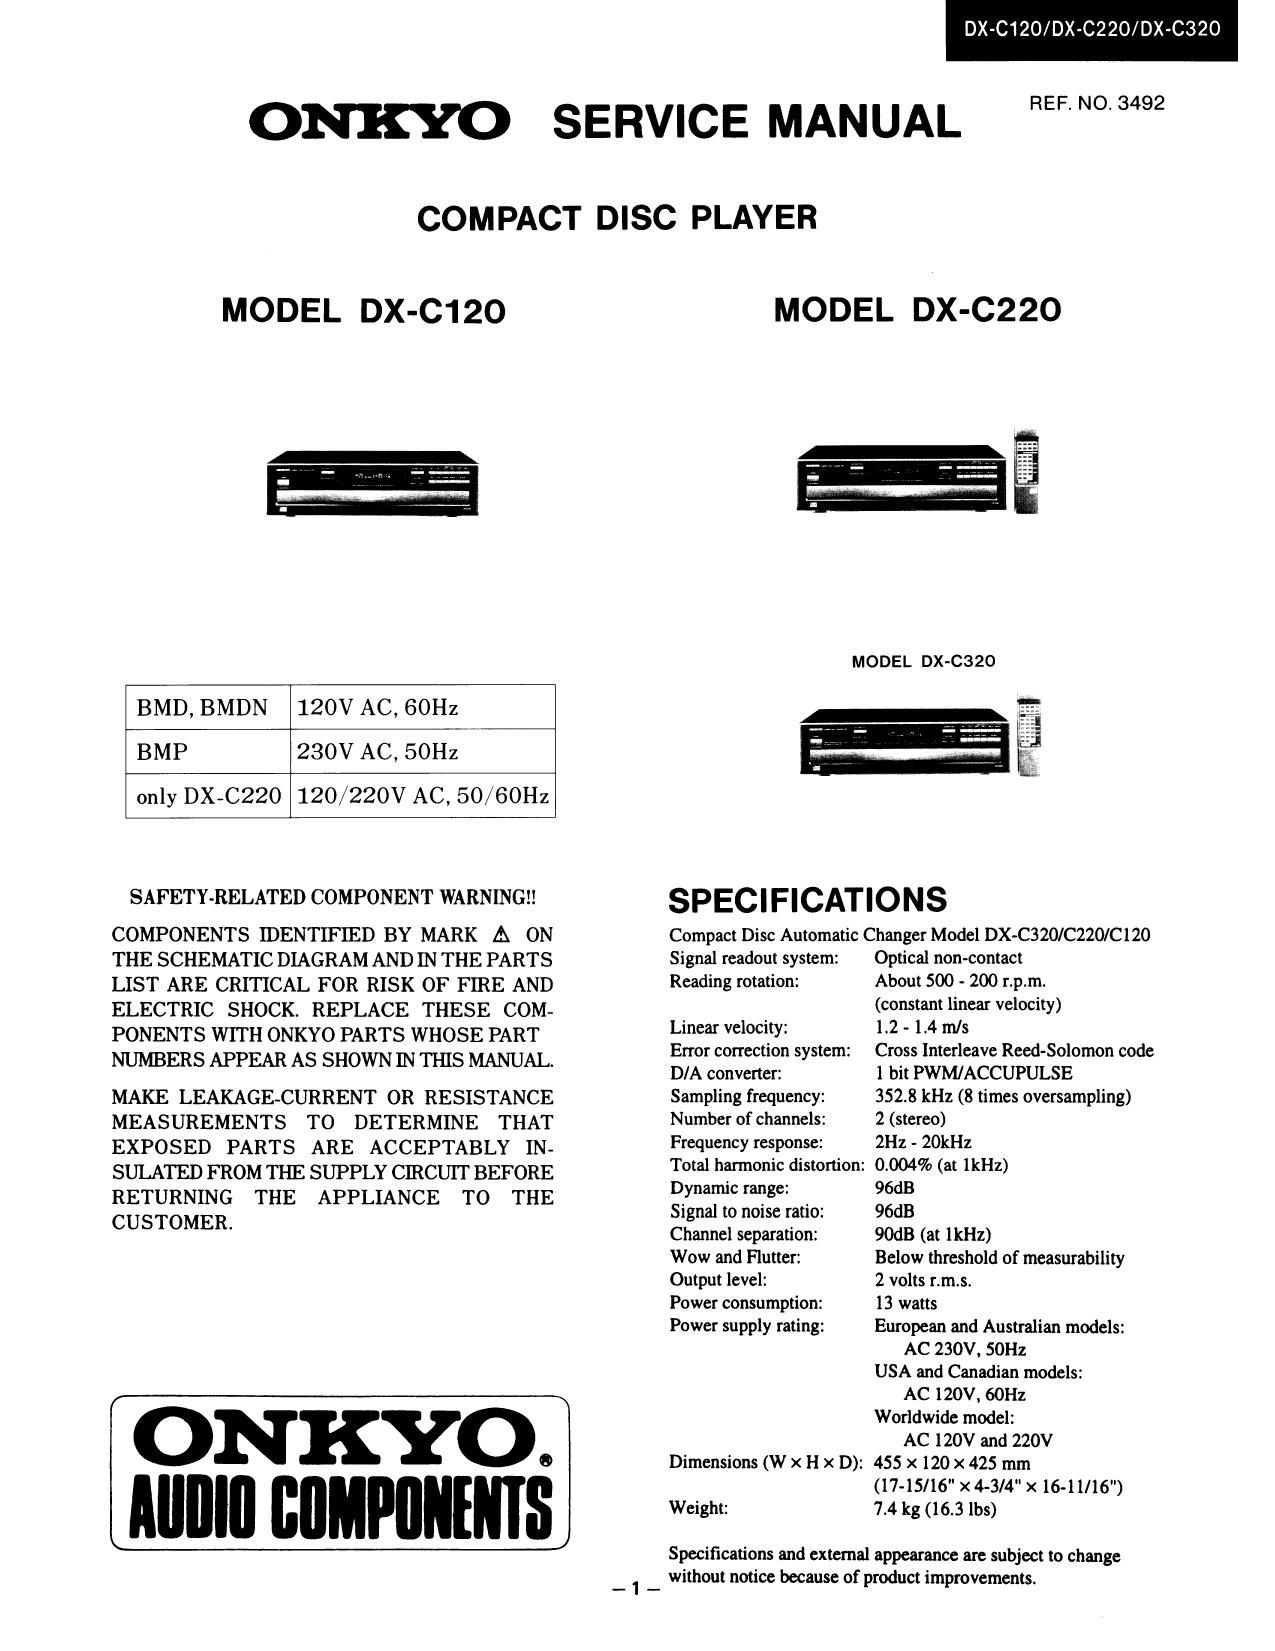 Onkyo DXC 1200 Service Manual